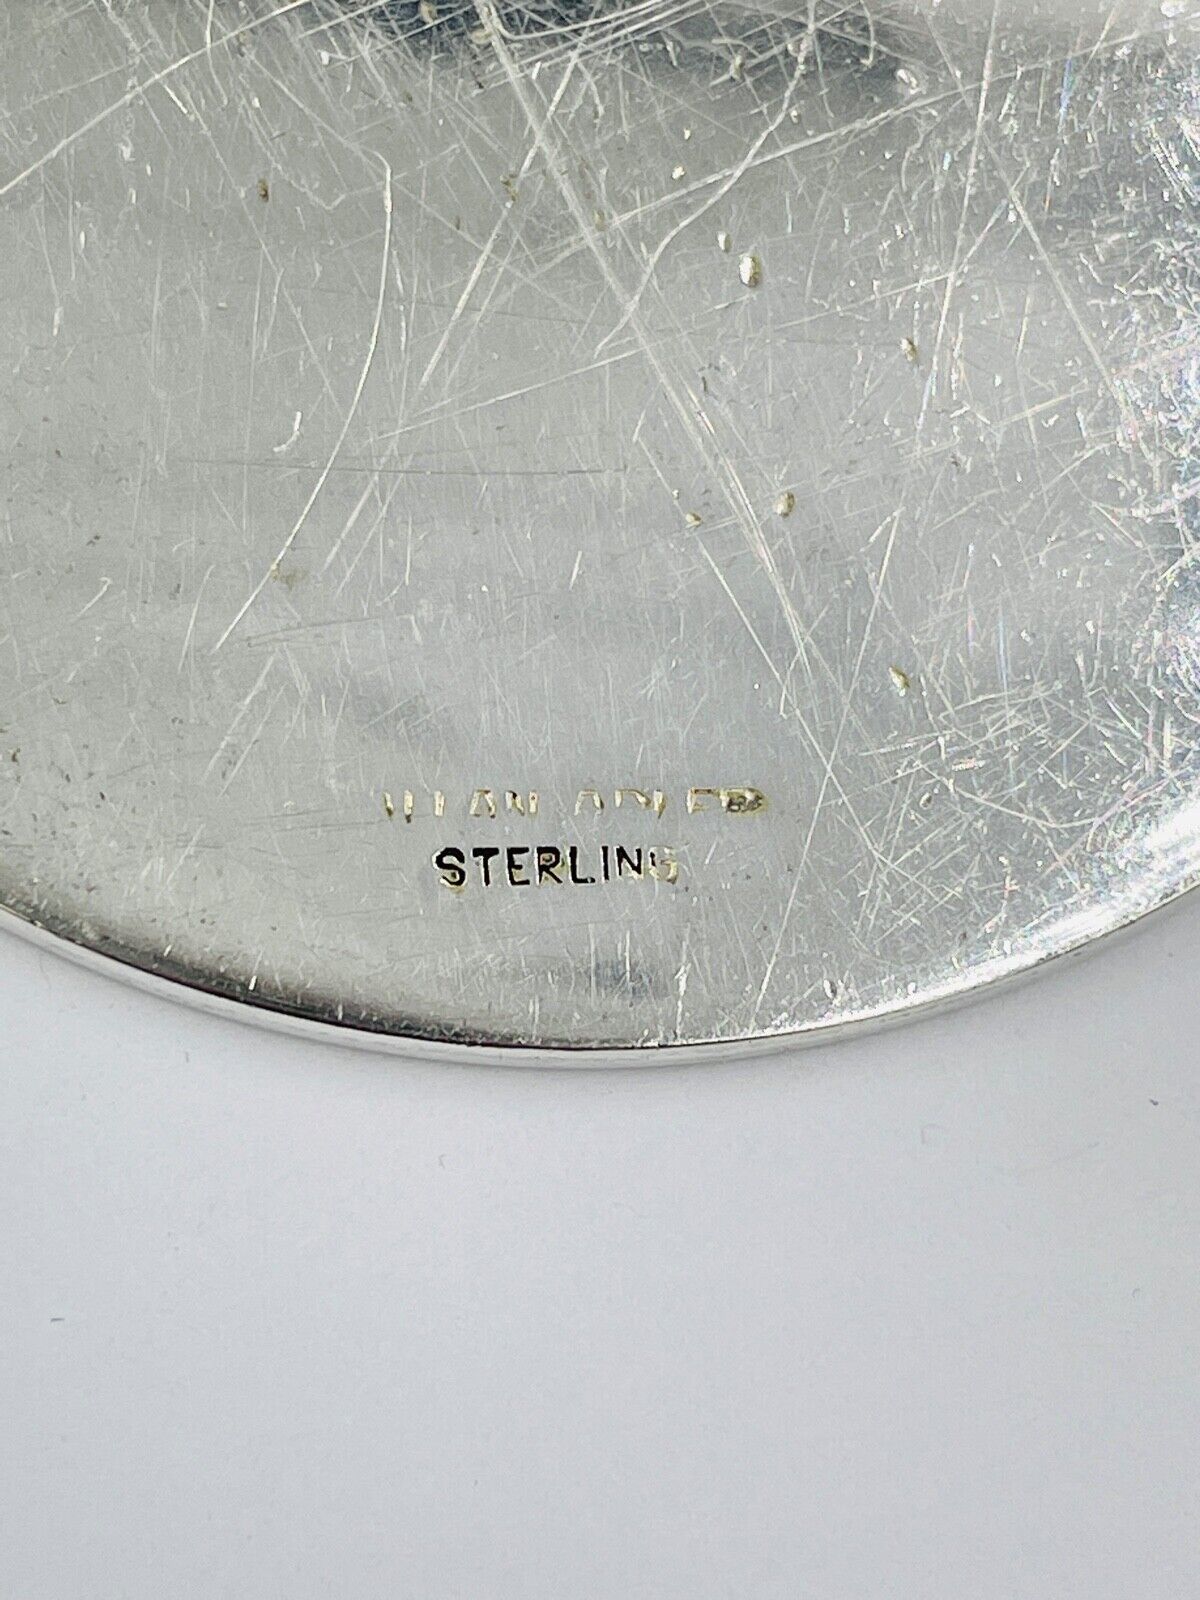 Rare Allen Adler Sterling Silver large Disc pendant Monogramed